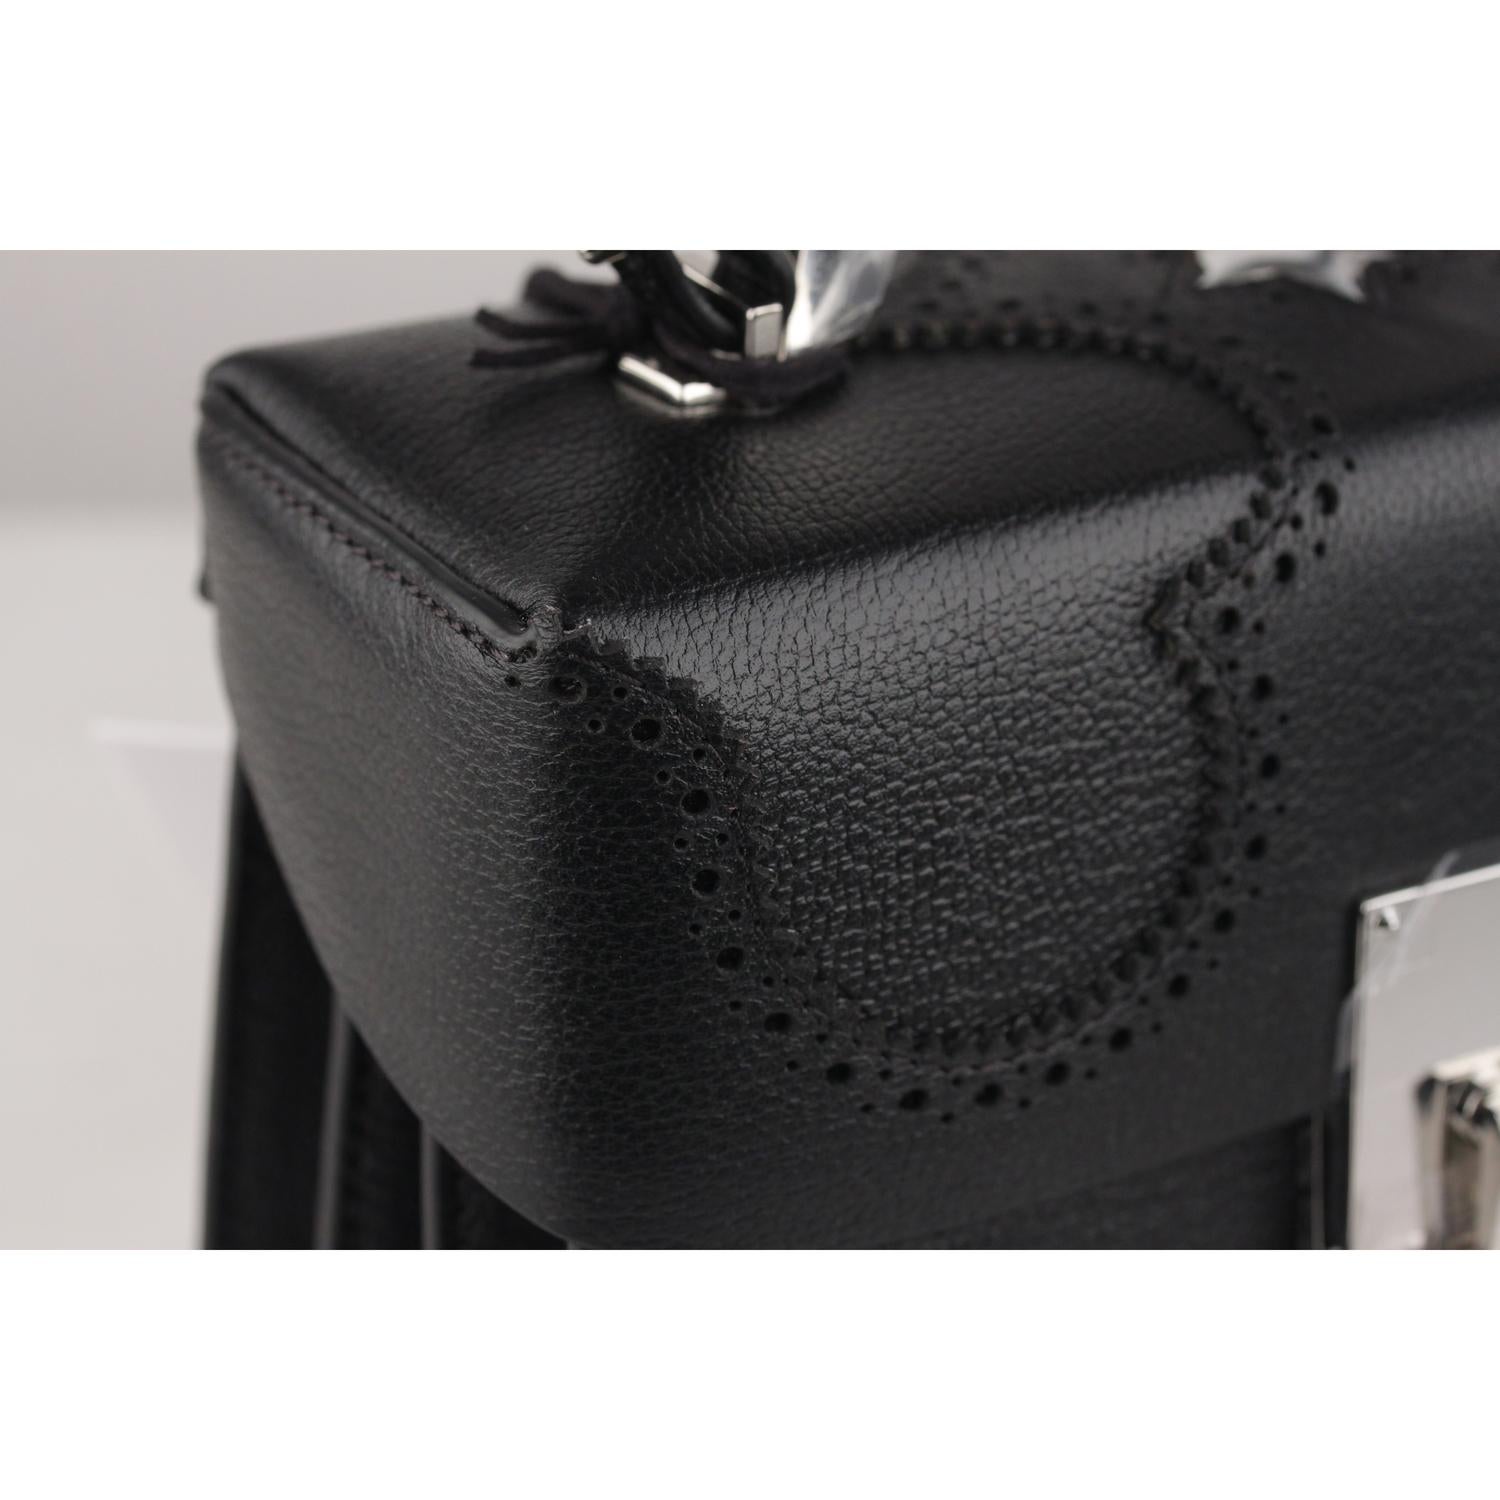 The Volon Black Leather Data Alice Small Crossbody Shoulder Box Bag Handbag 1